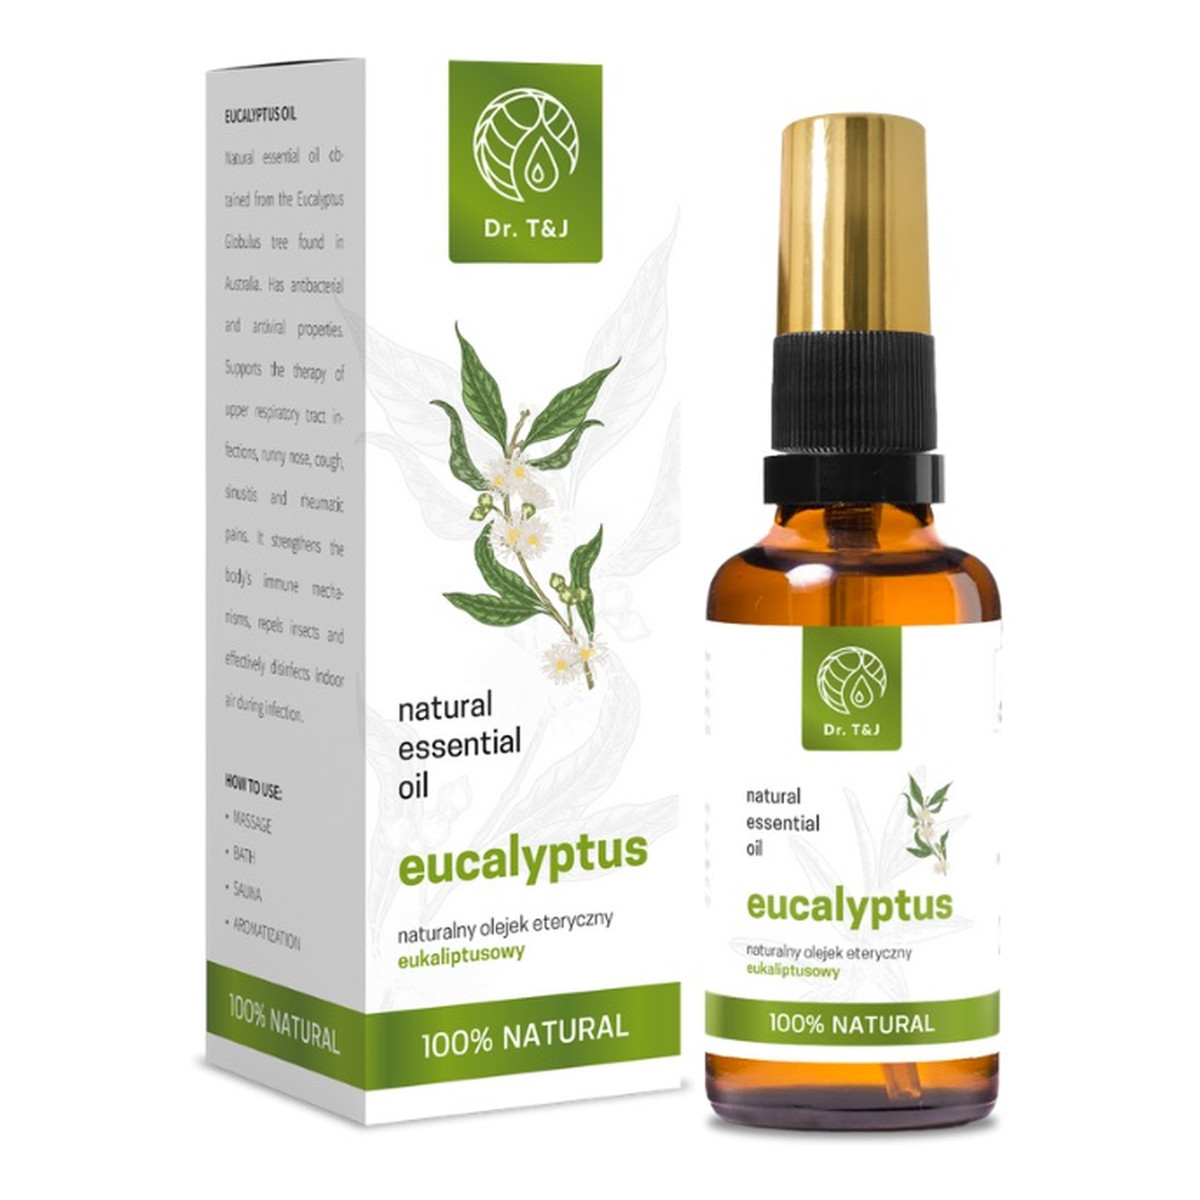 Dr. T&J Natural Eucalyptus Essential Oil naturalny olej eteryczny eukaliptusowy 50ml